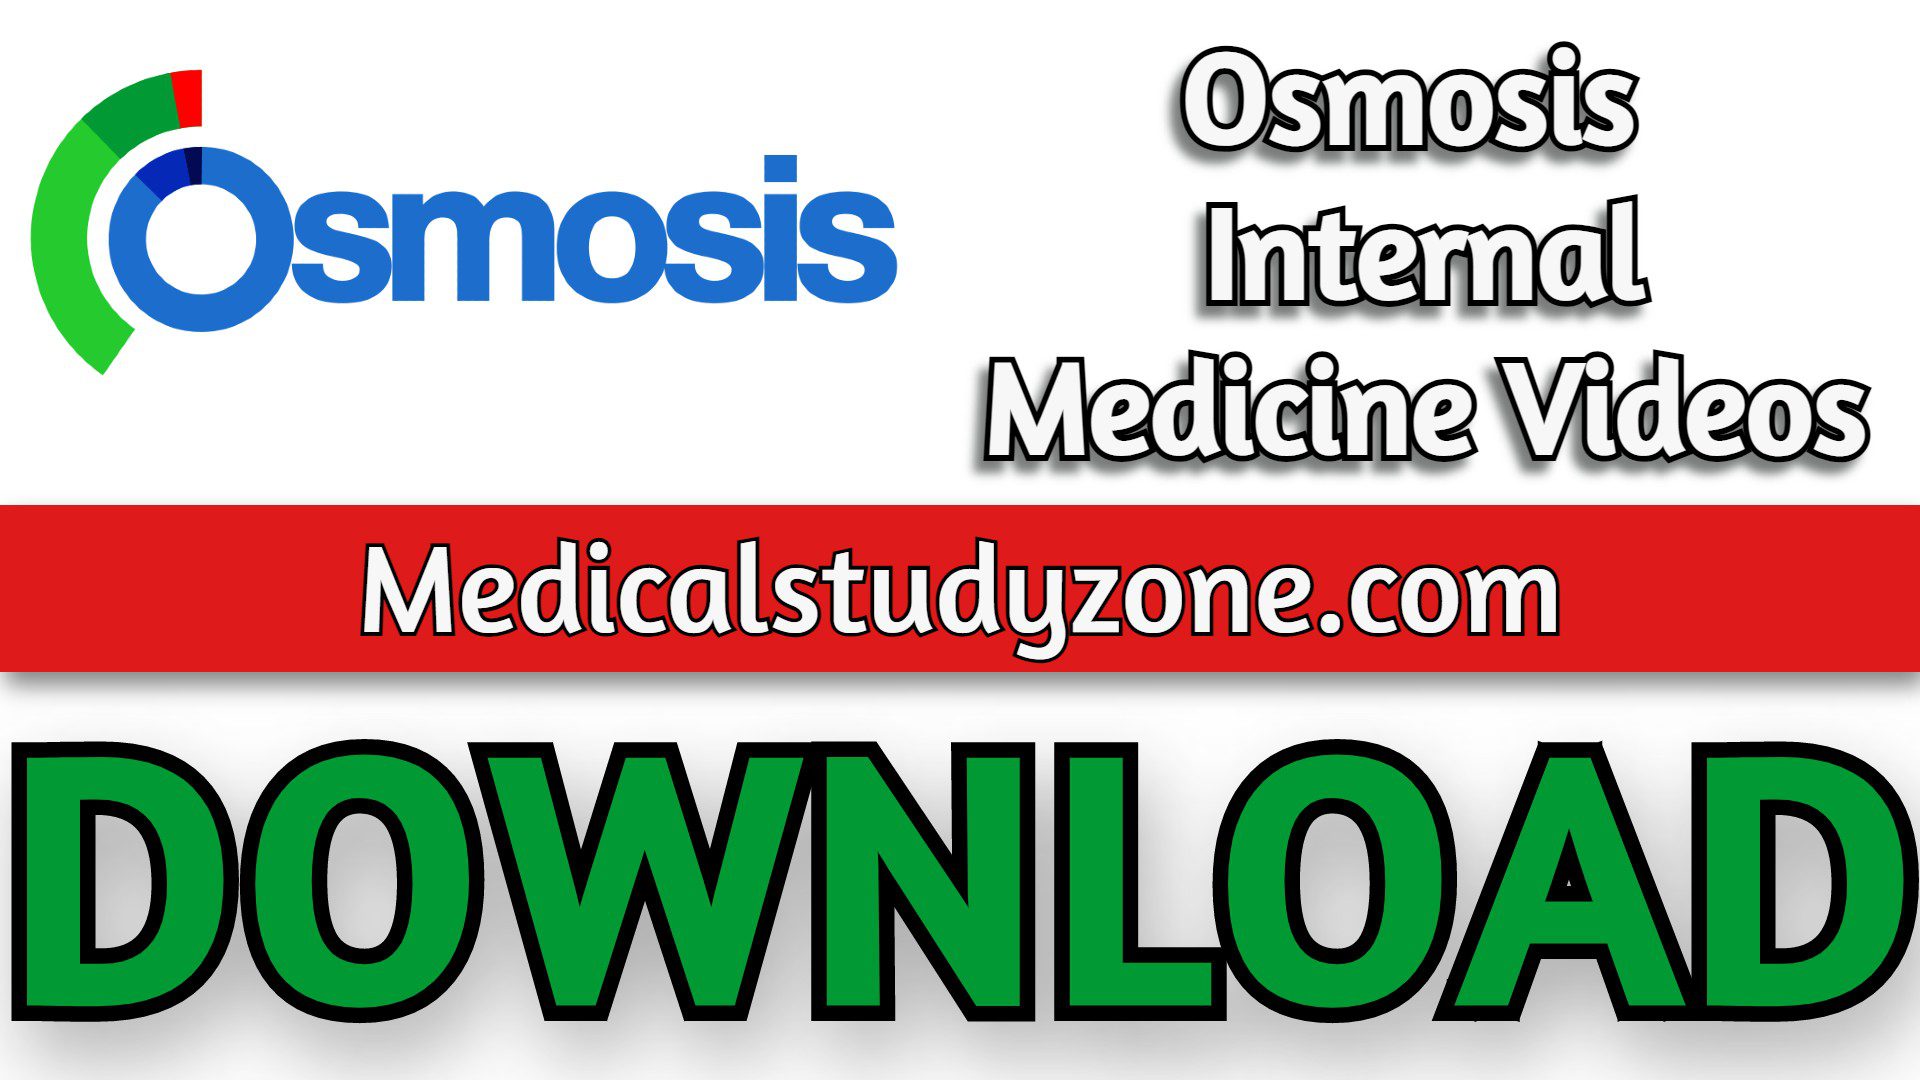 Osmosis Internal Medicine Videos 2023 Free Download